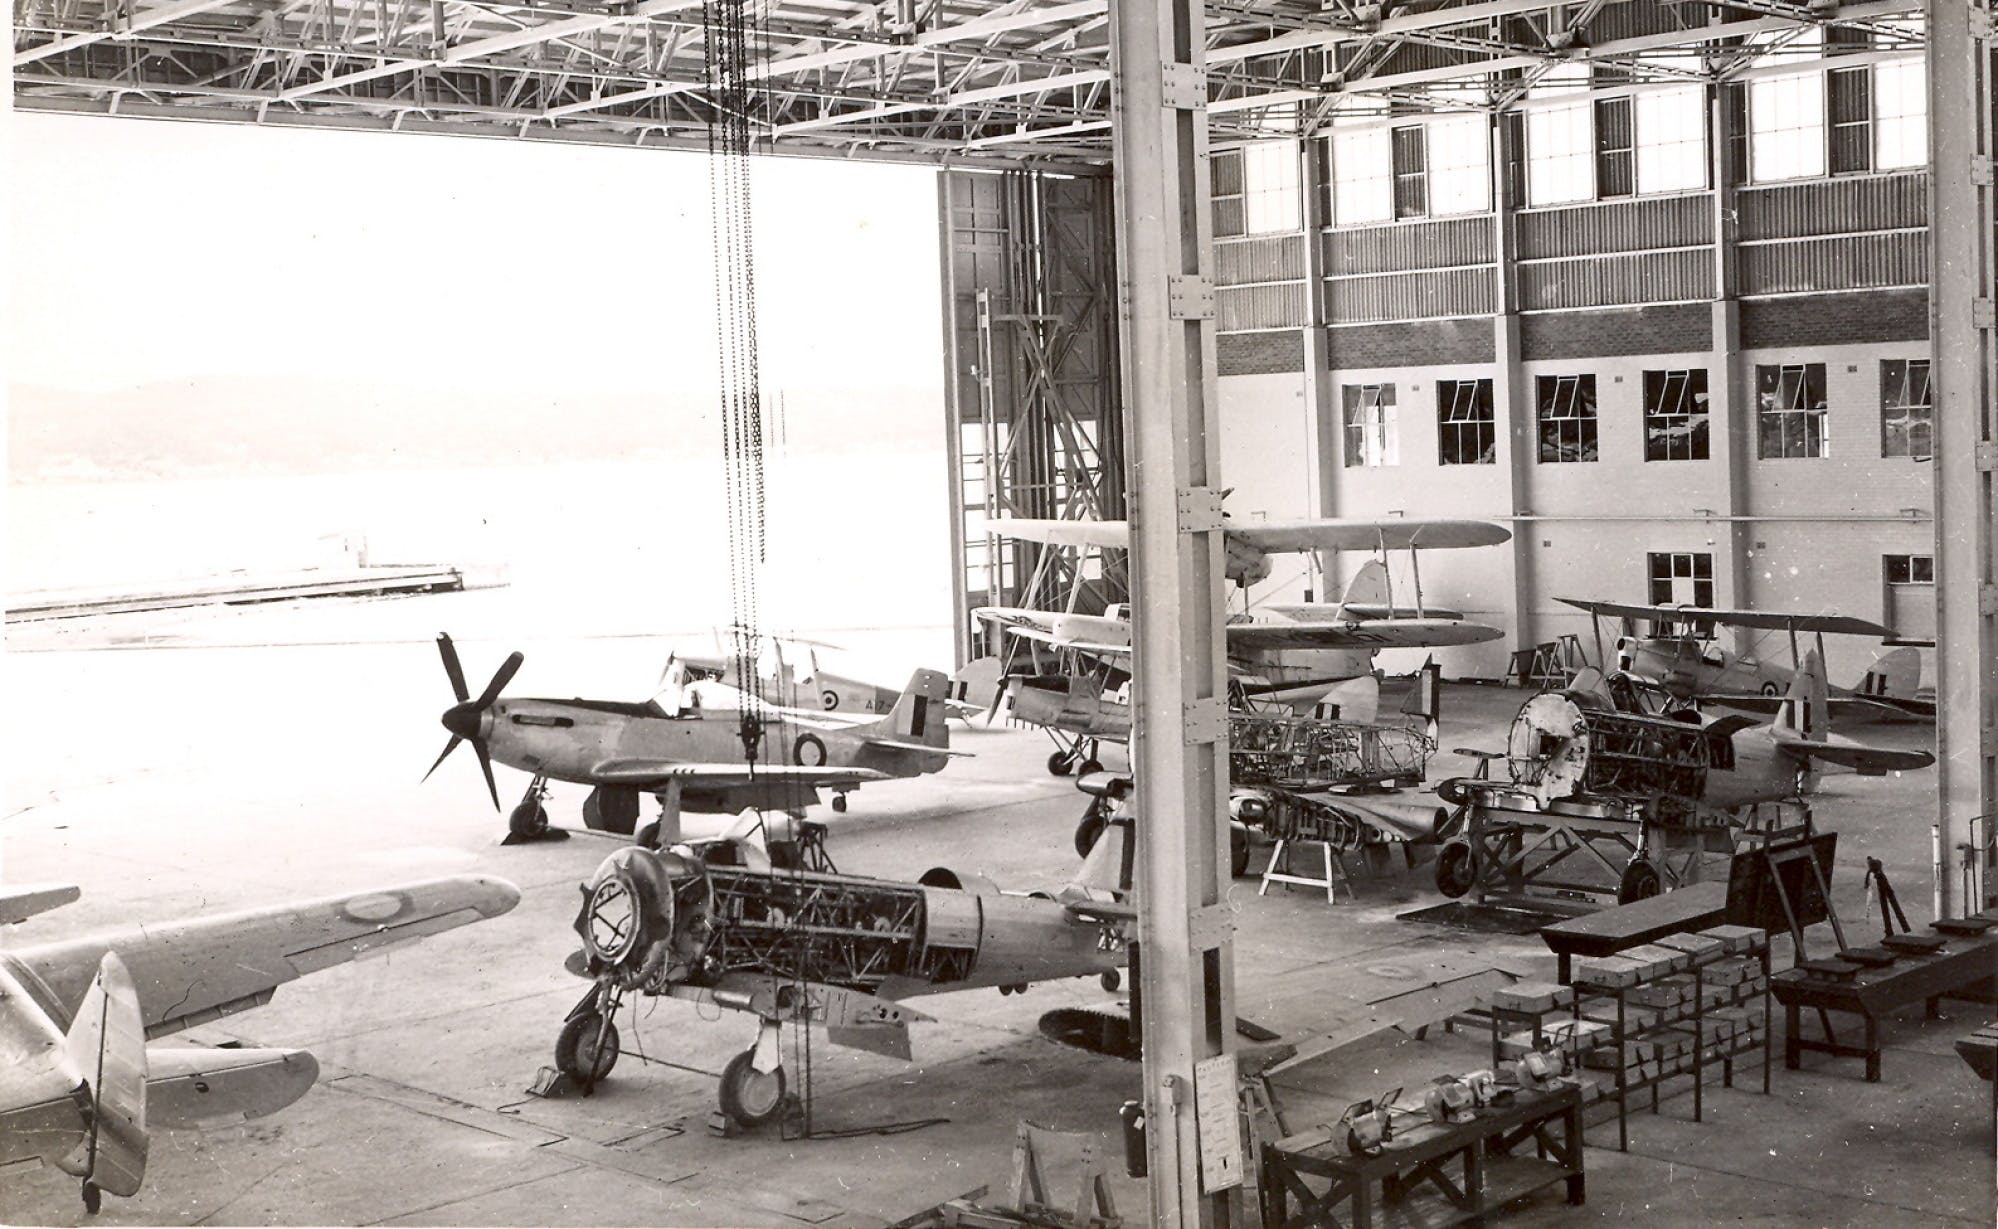 Rathmines hangar